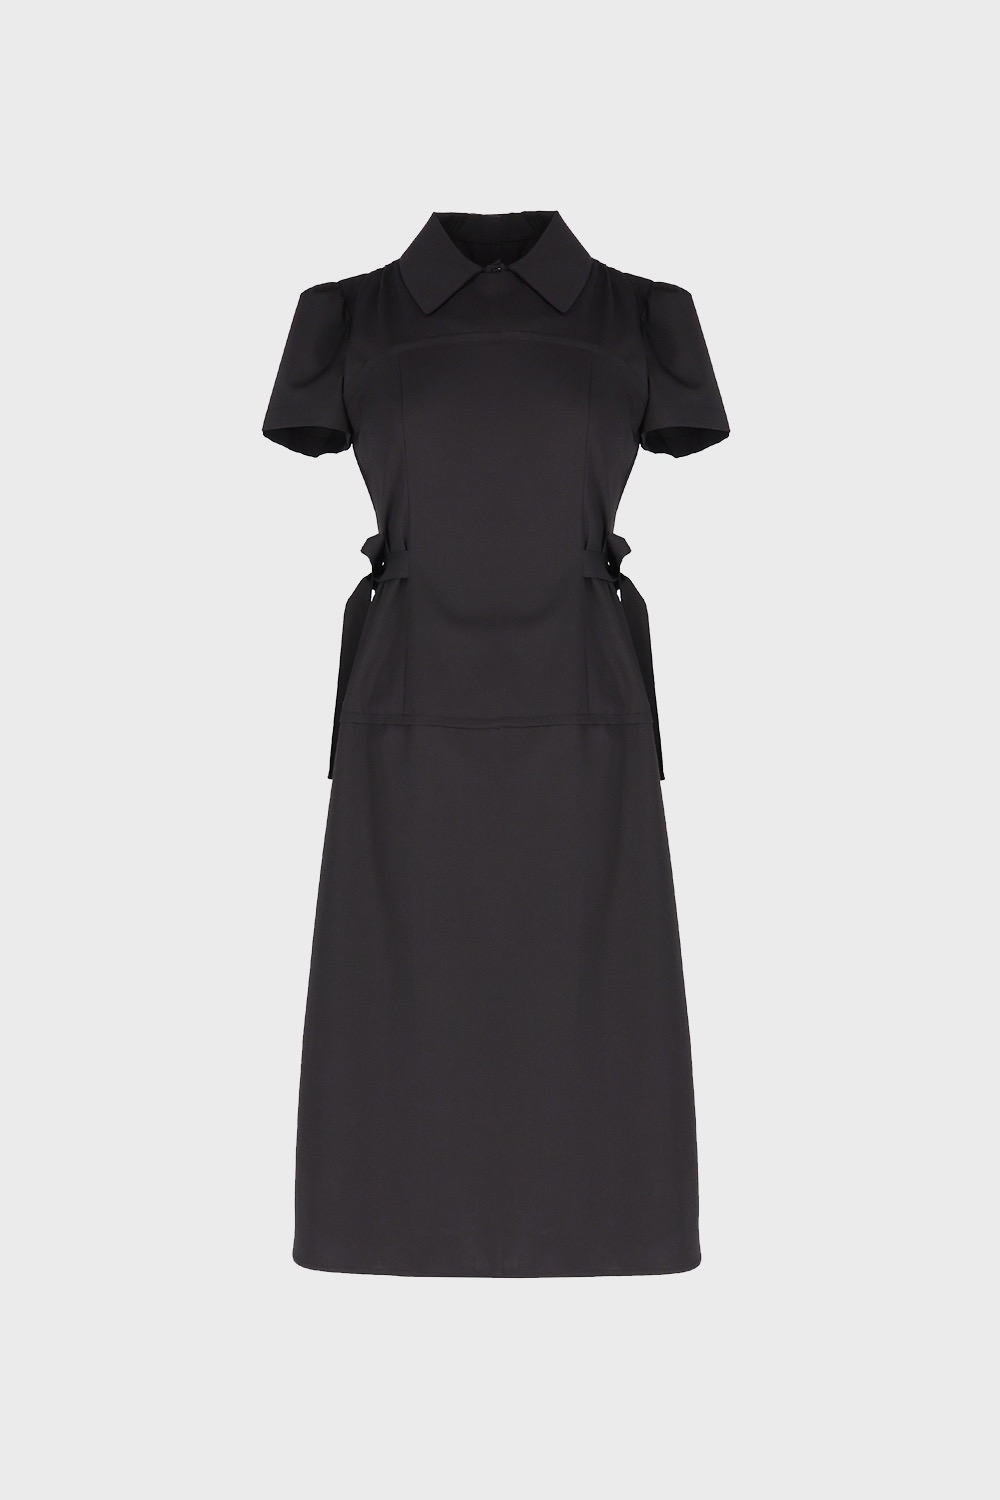 02 dress set (black)